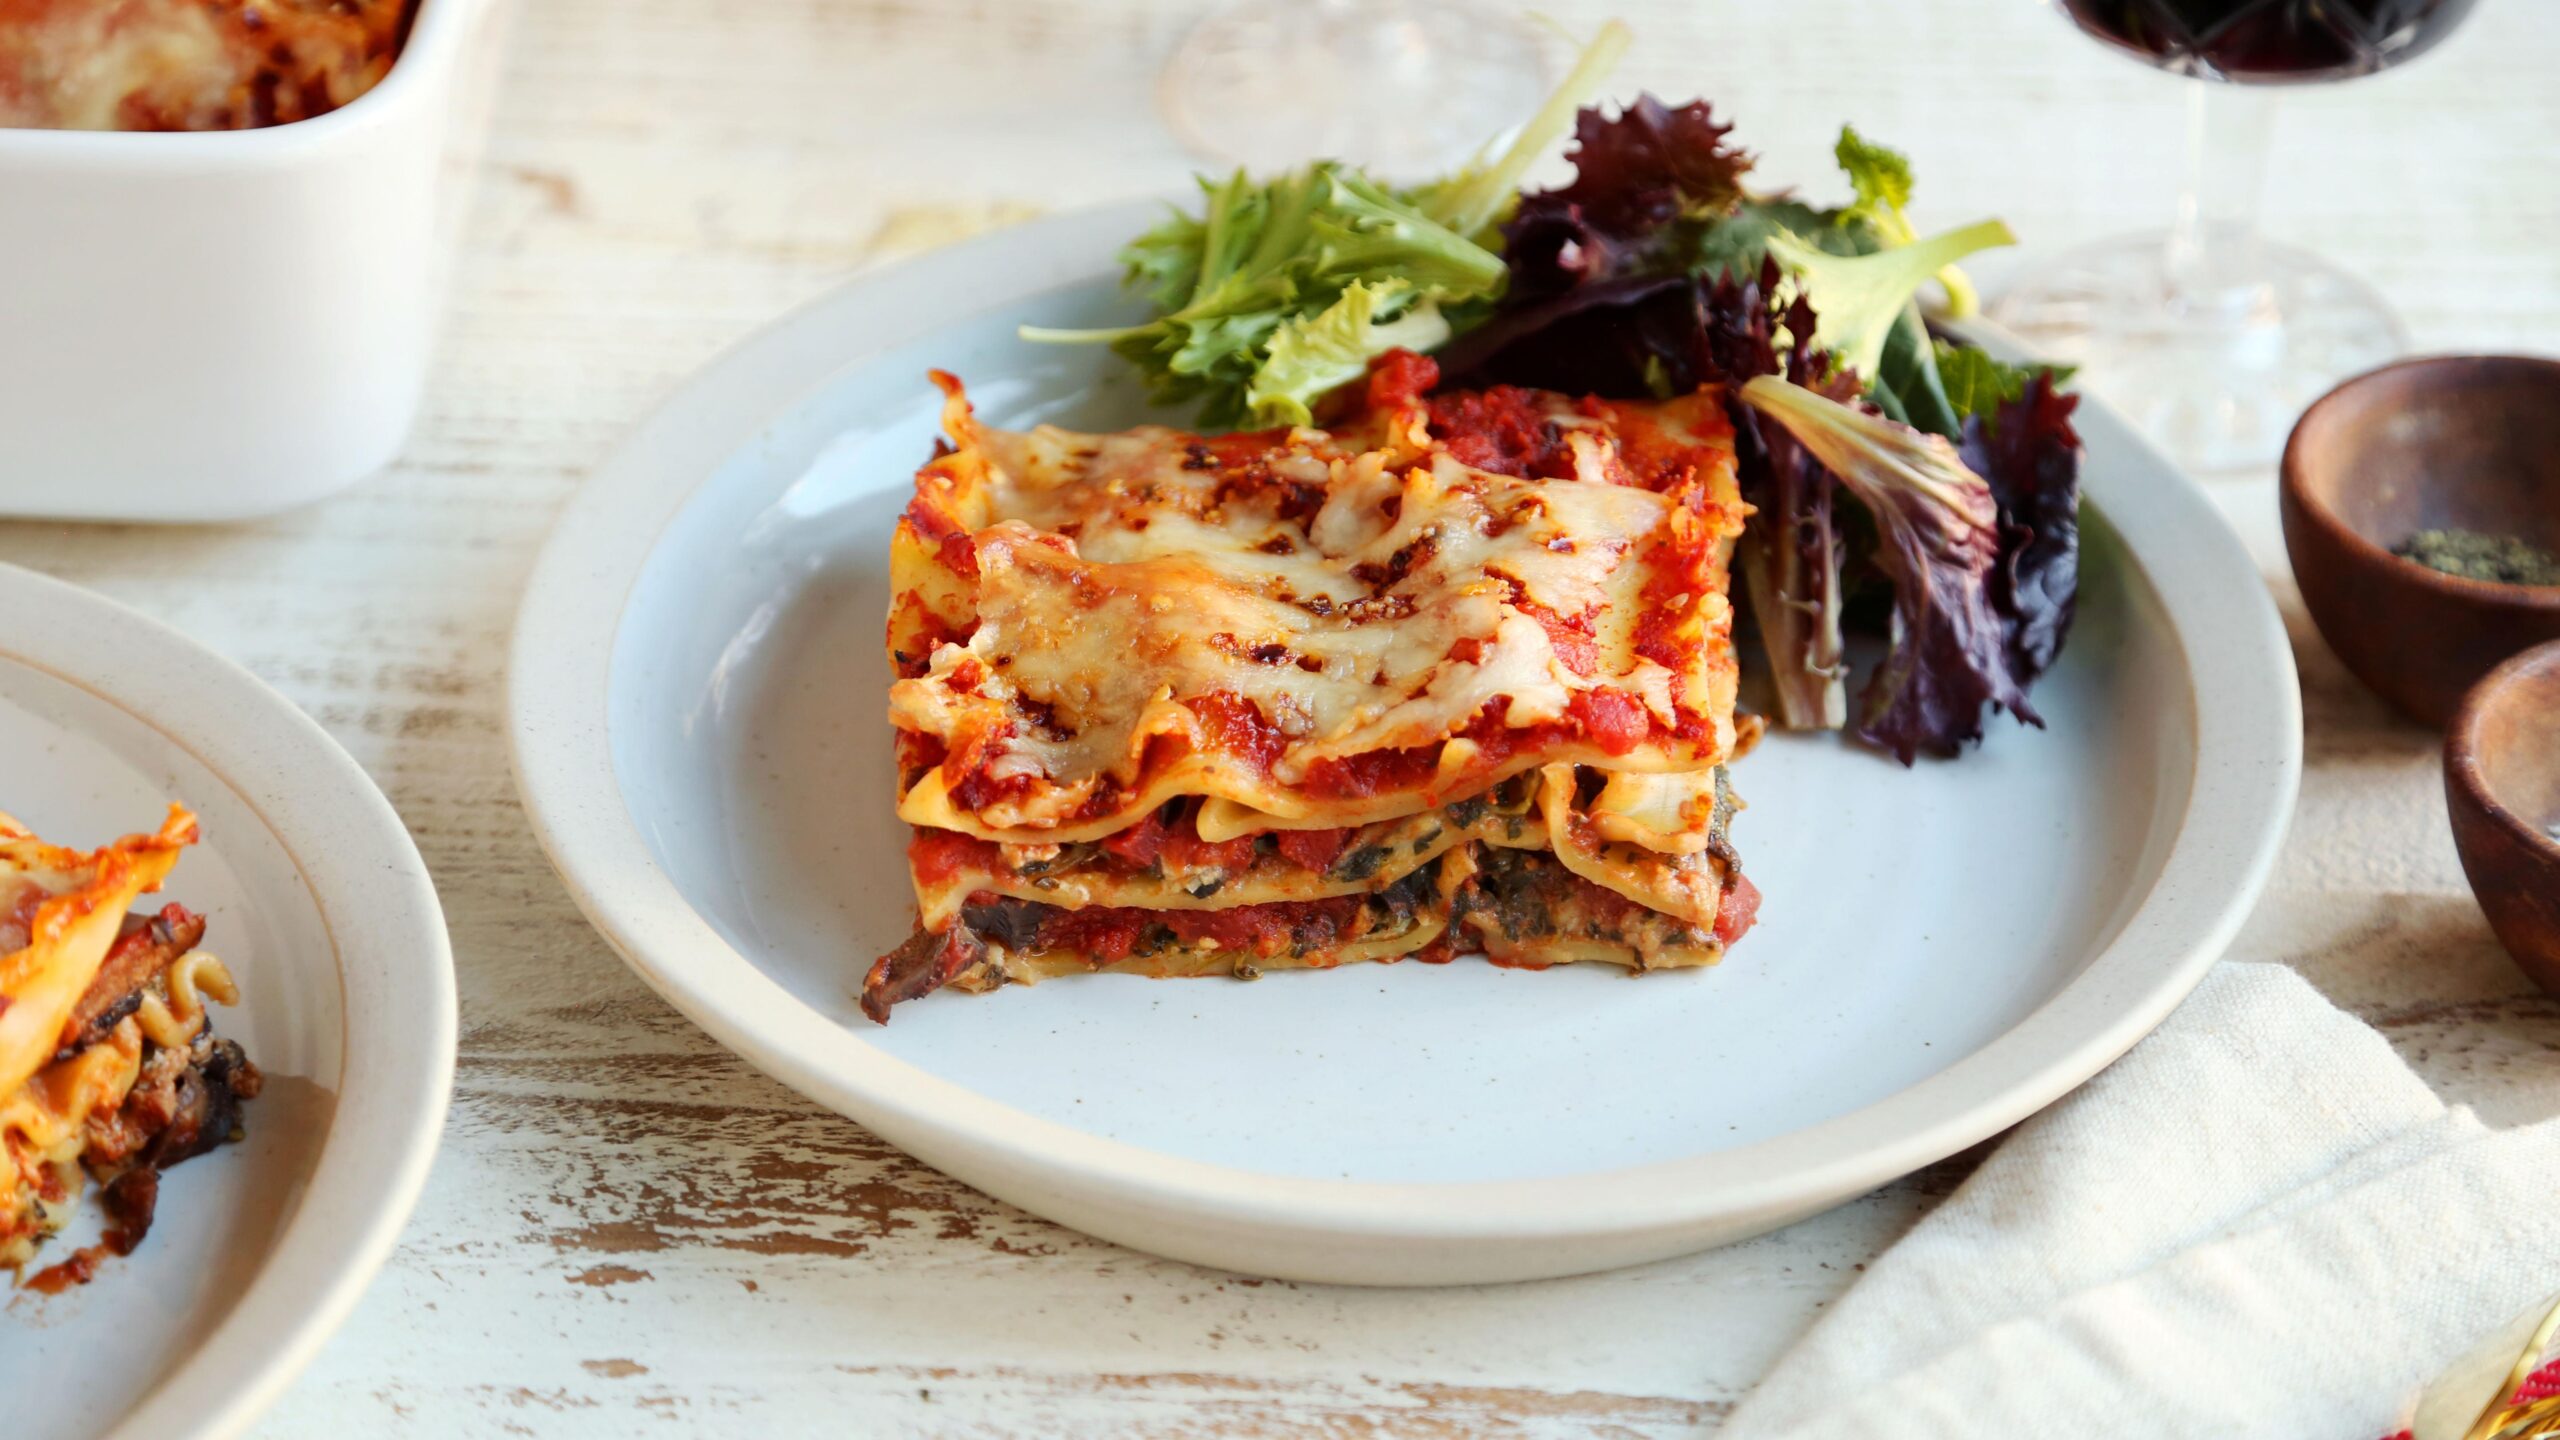  Satisfy your cravings with the ultimate comfort food: Portabella Mushroom lasagna!